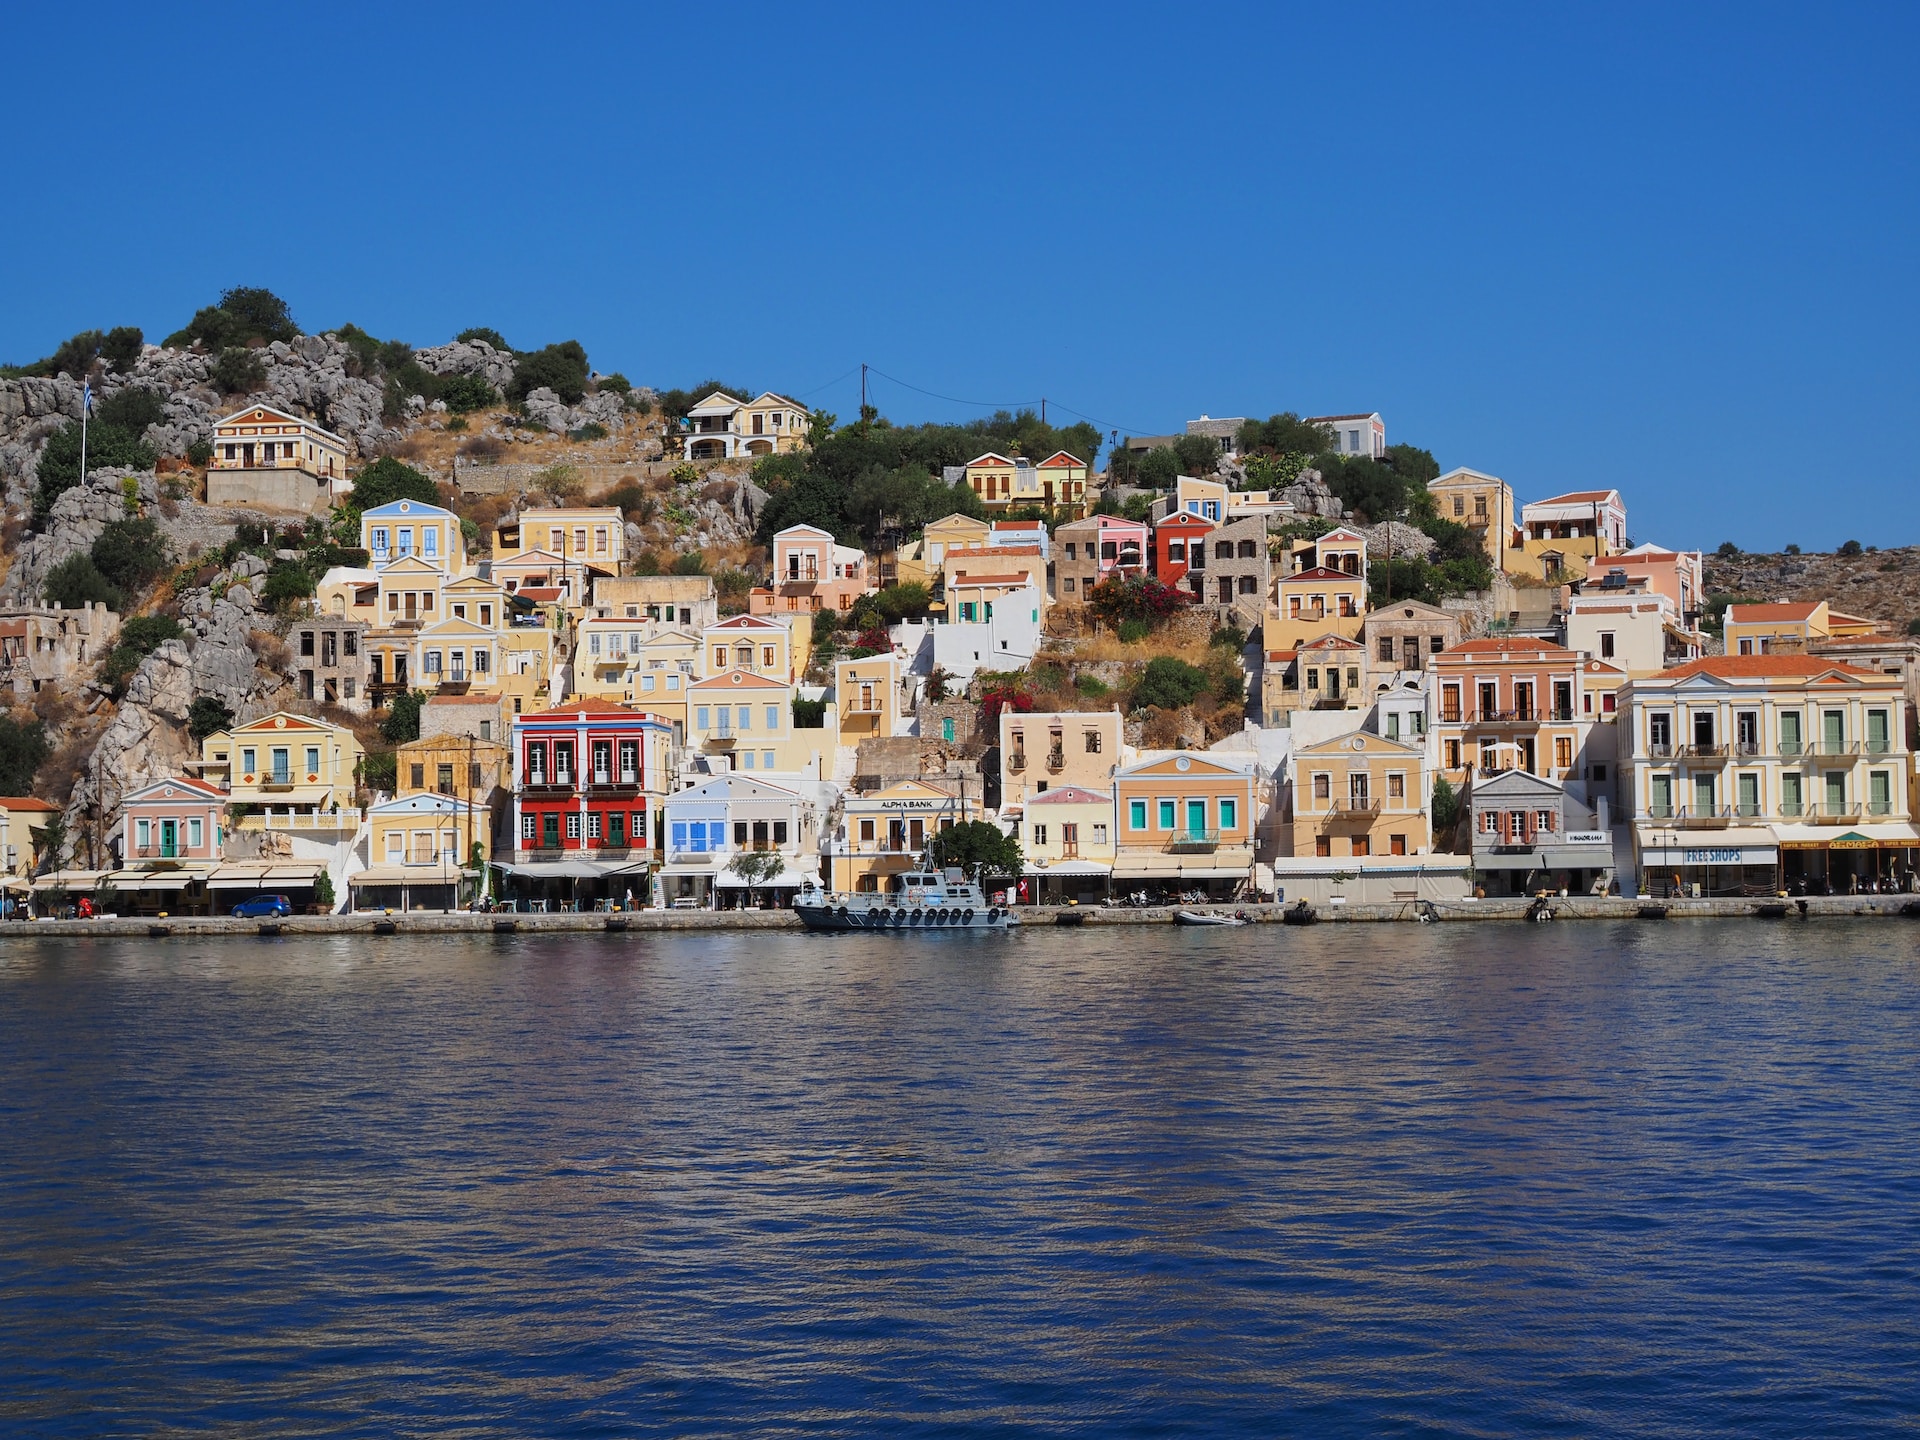 Symi - a luxury travel destination in Greece.